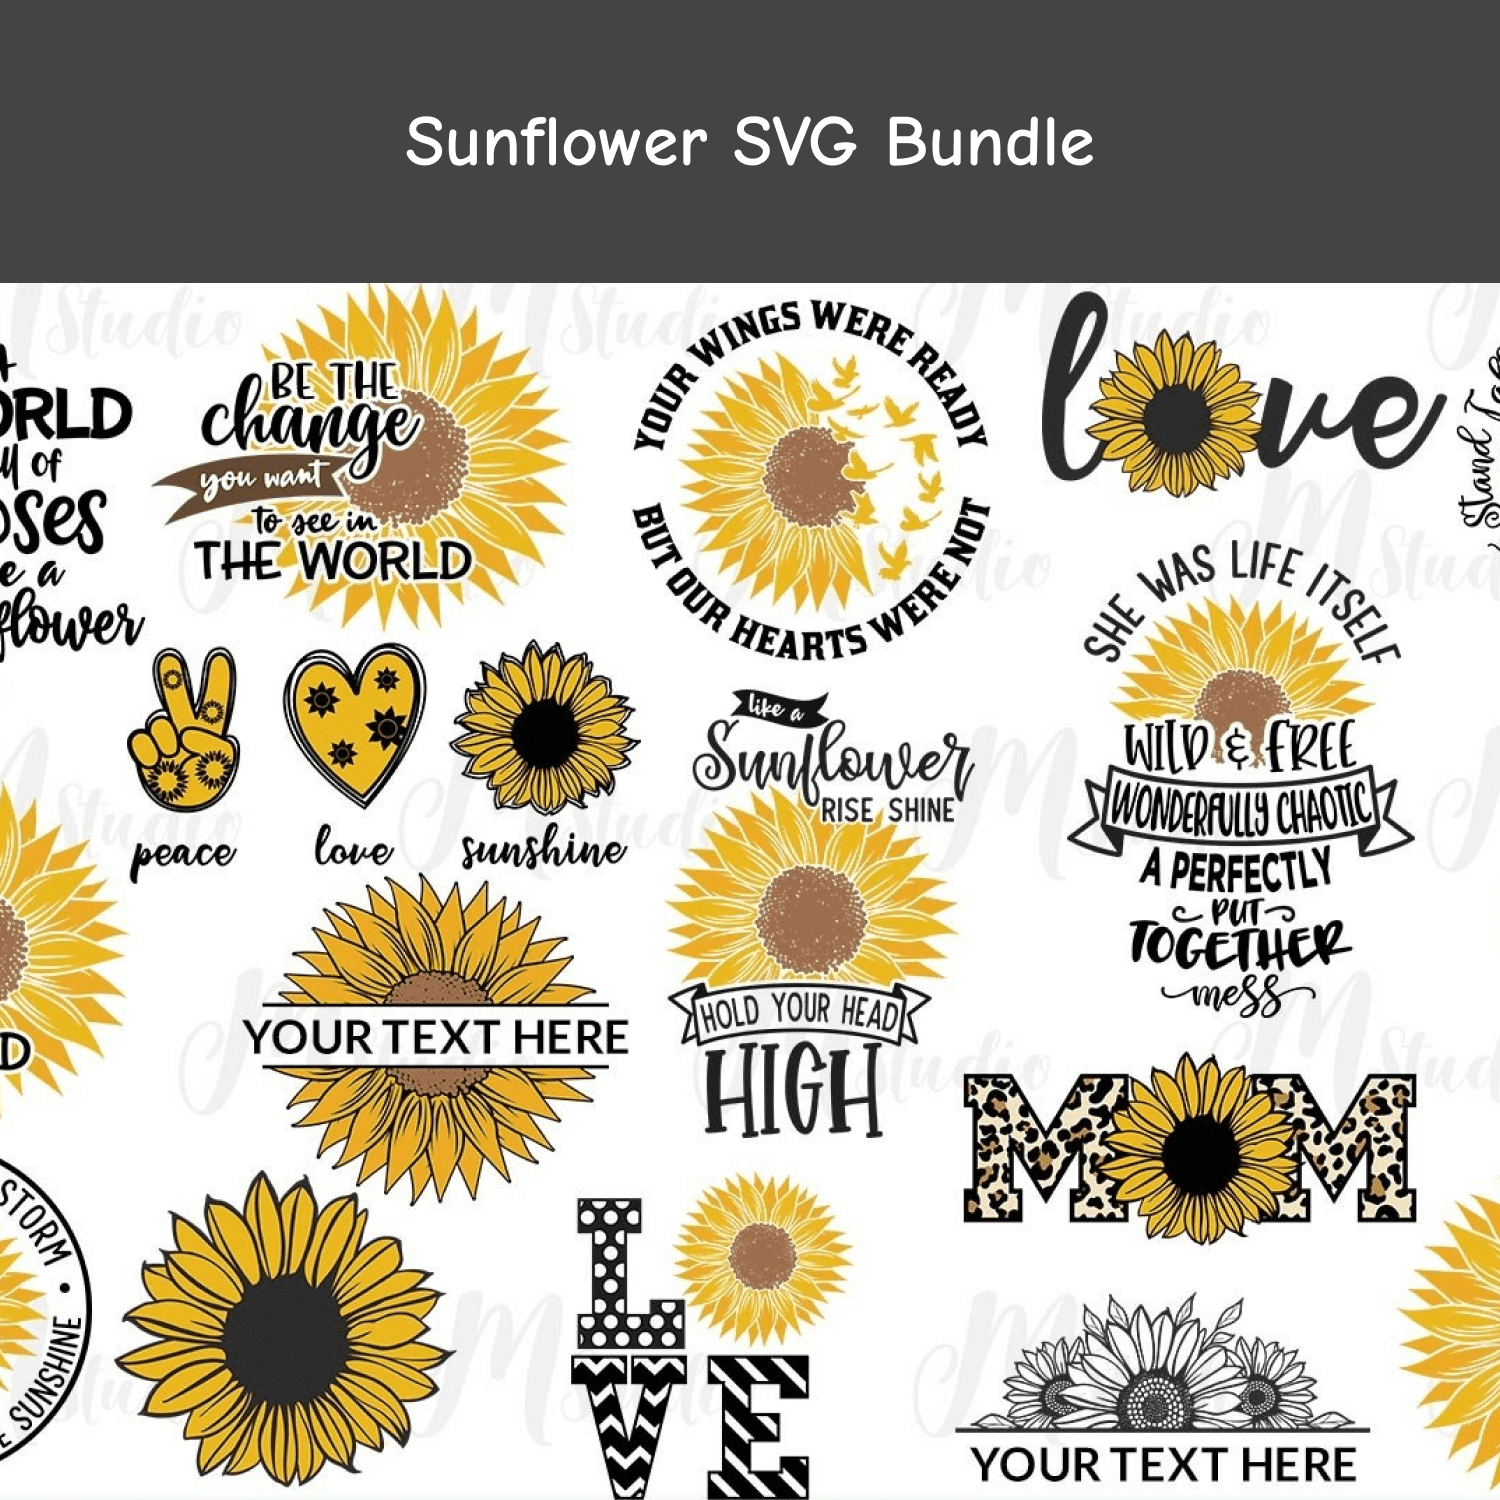 Sunflower SVG Bundle cover.